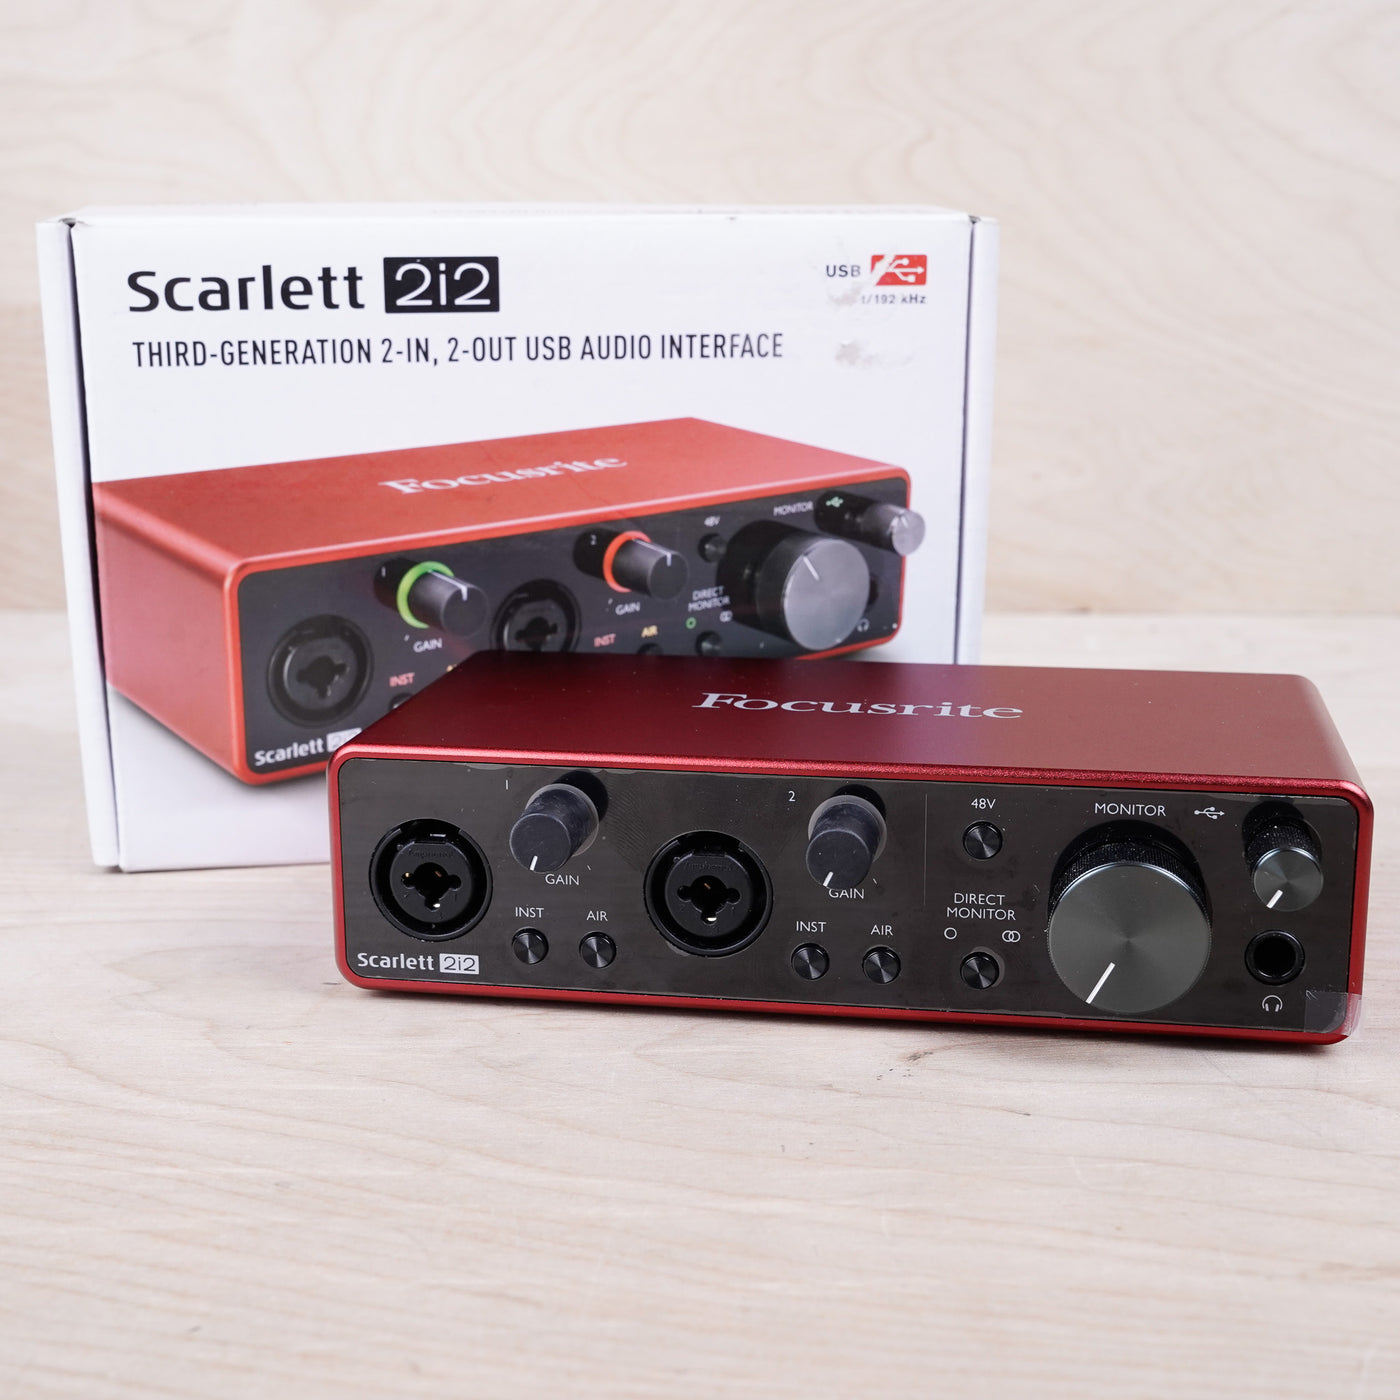 Focusrite Scarlett 2i2 3rd Gen USB Audio Interface 2020 in Box